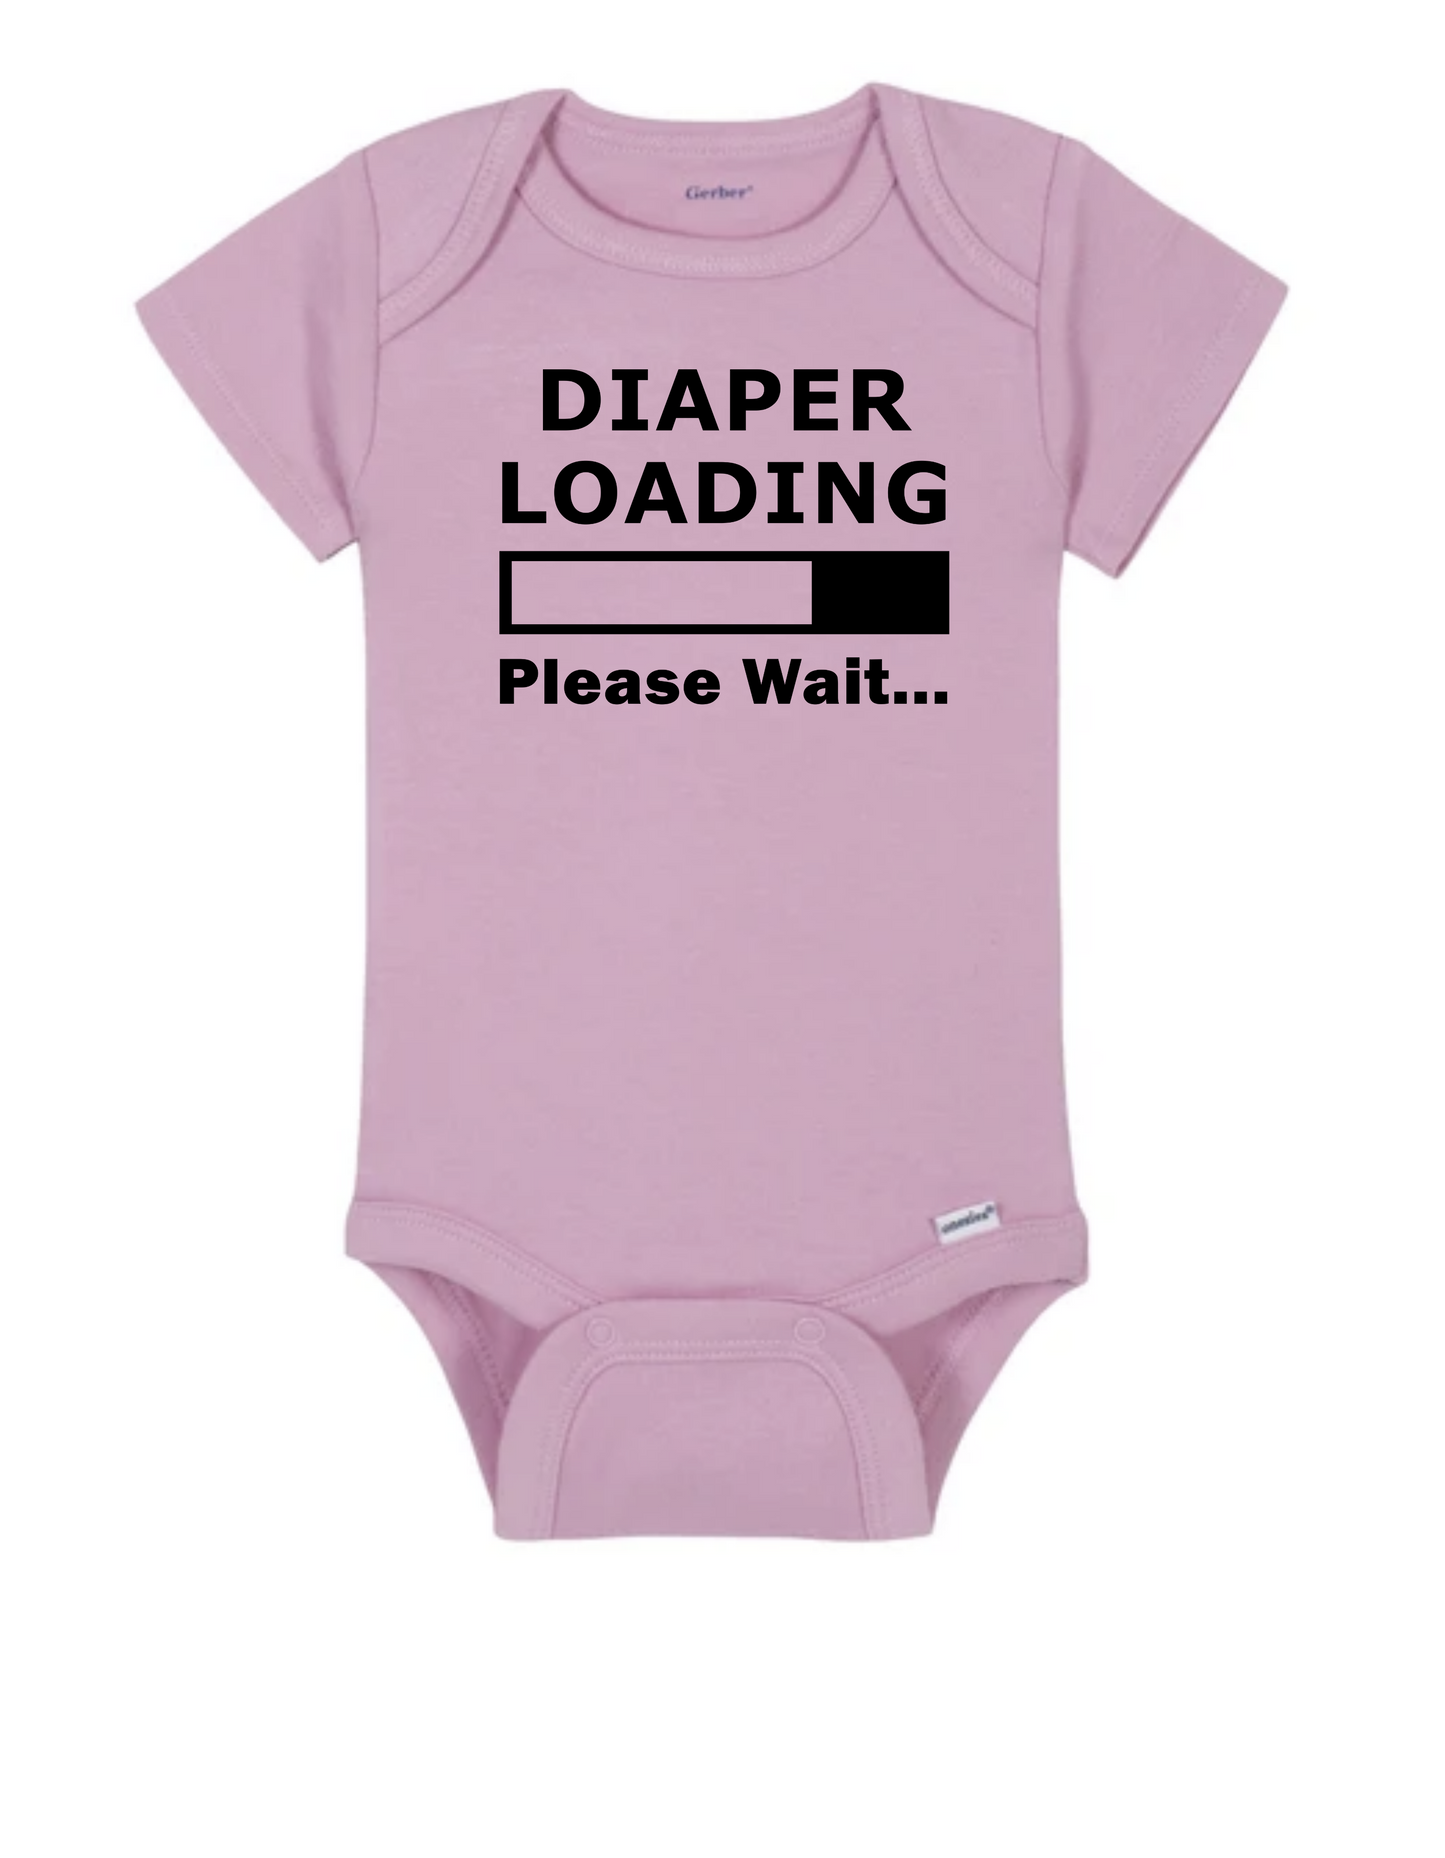 Diaper Loading, Please Wait - Onesie White, Pink, or Blue - Mister Snarky's